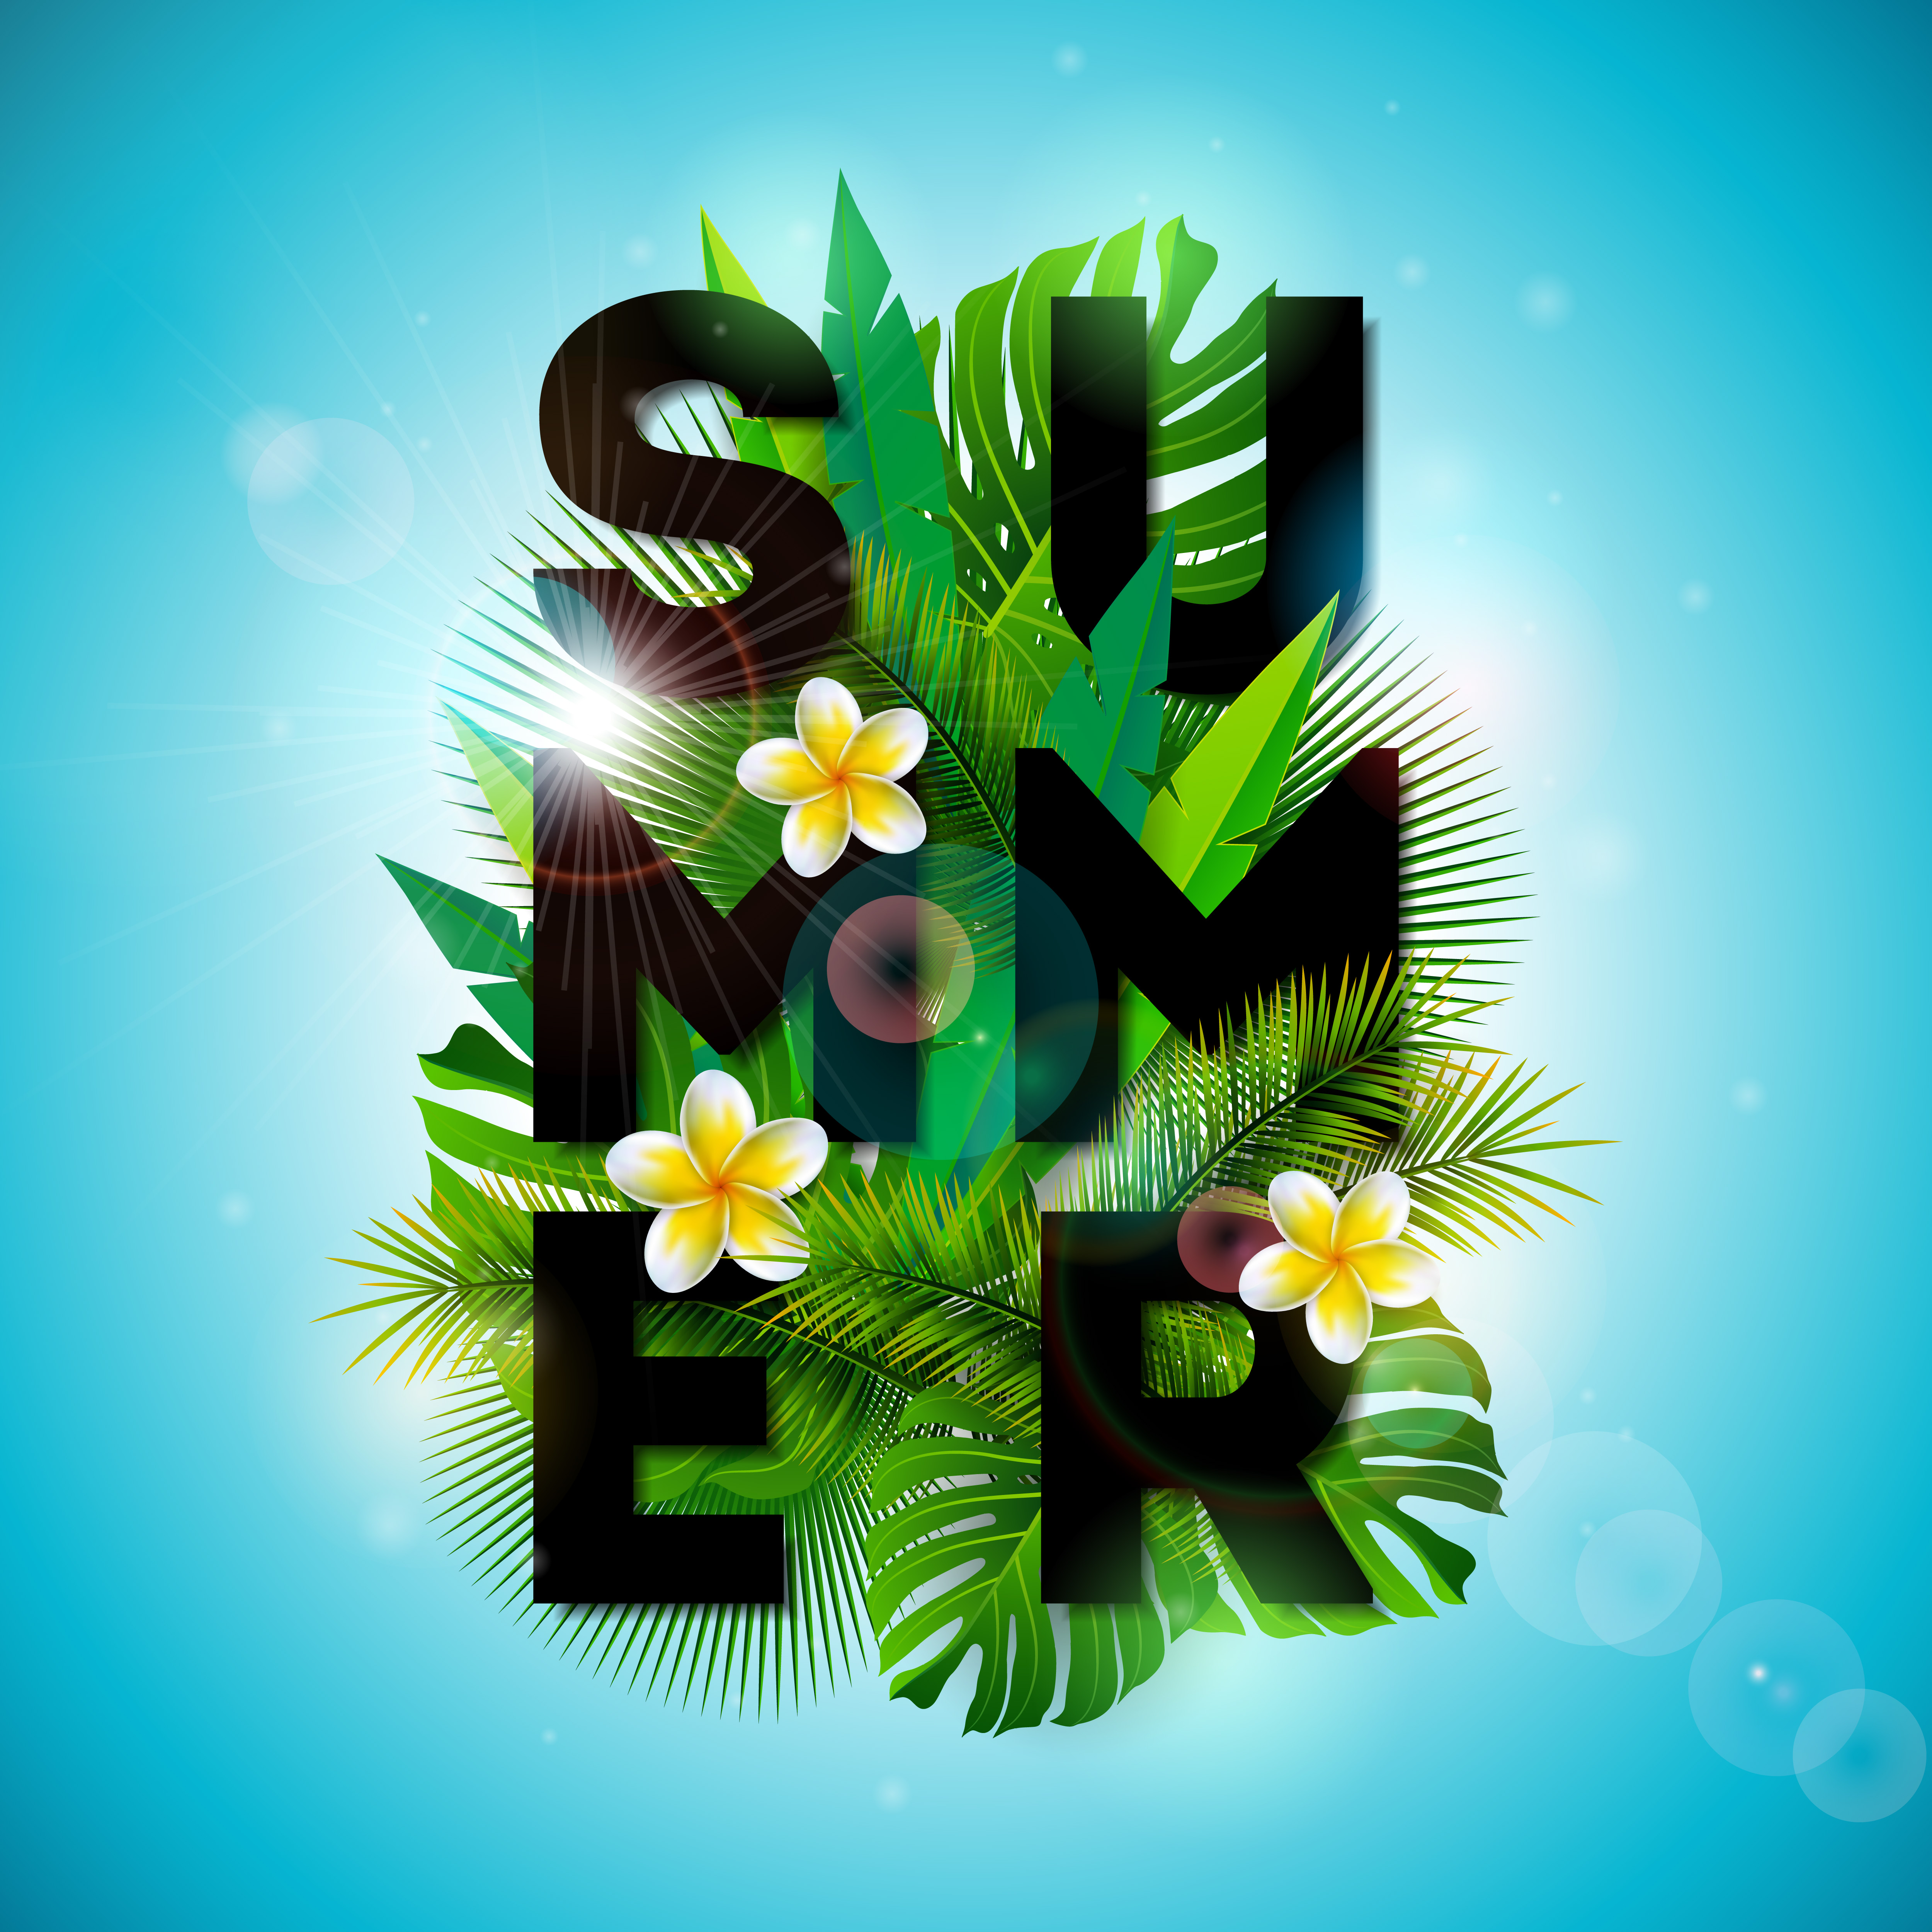 Summer Holiday illustration - Download Free Vectors ...